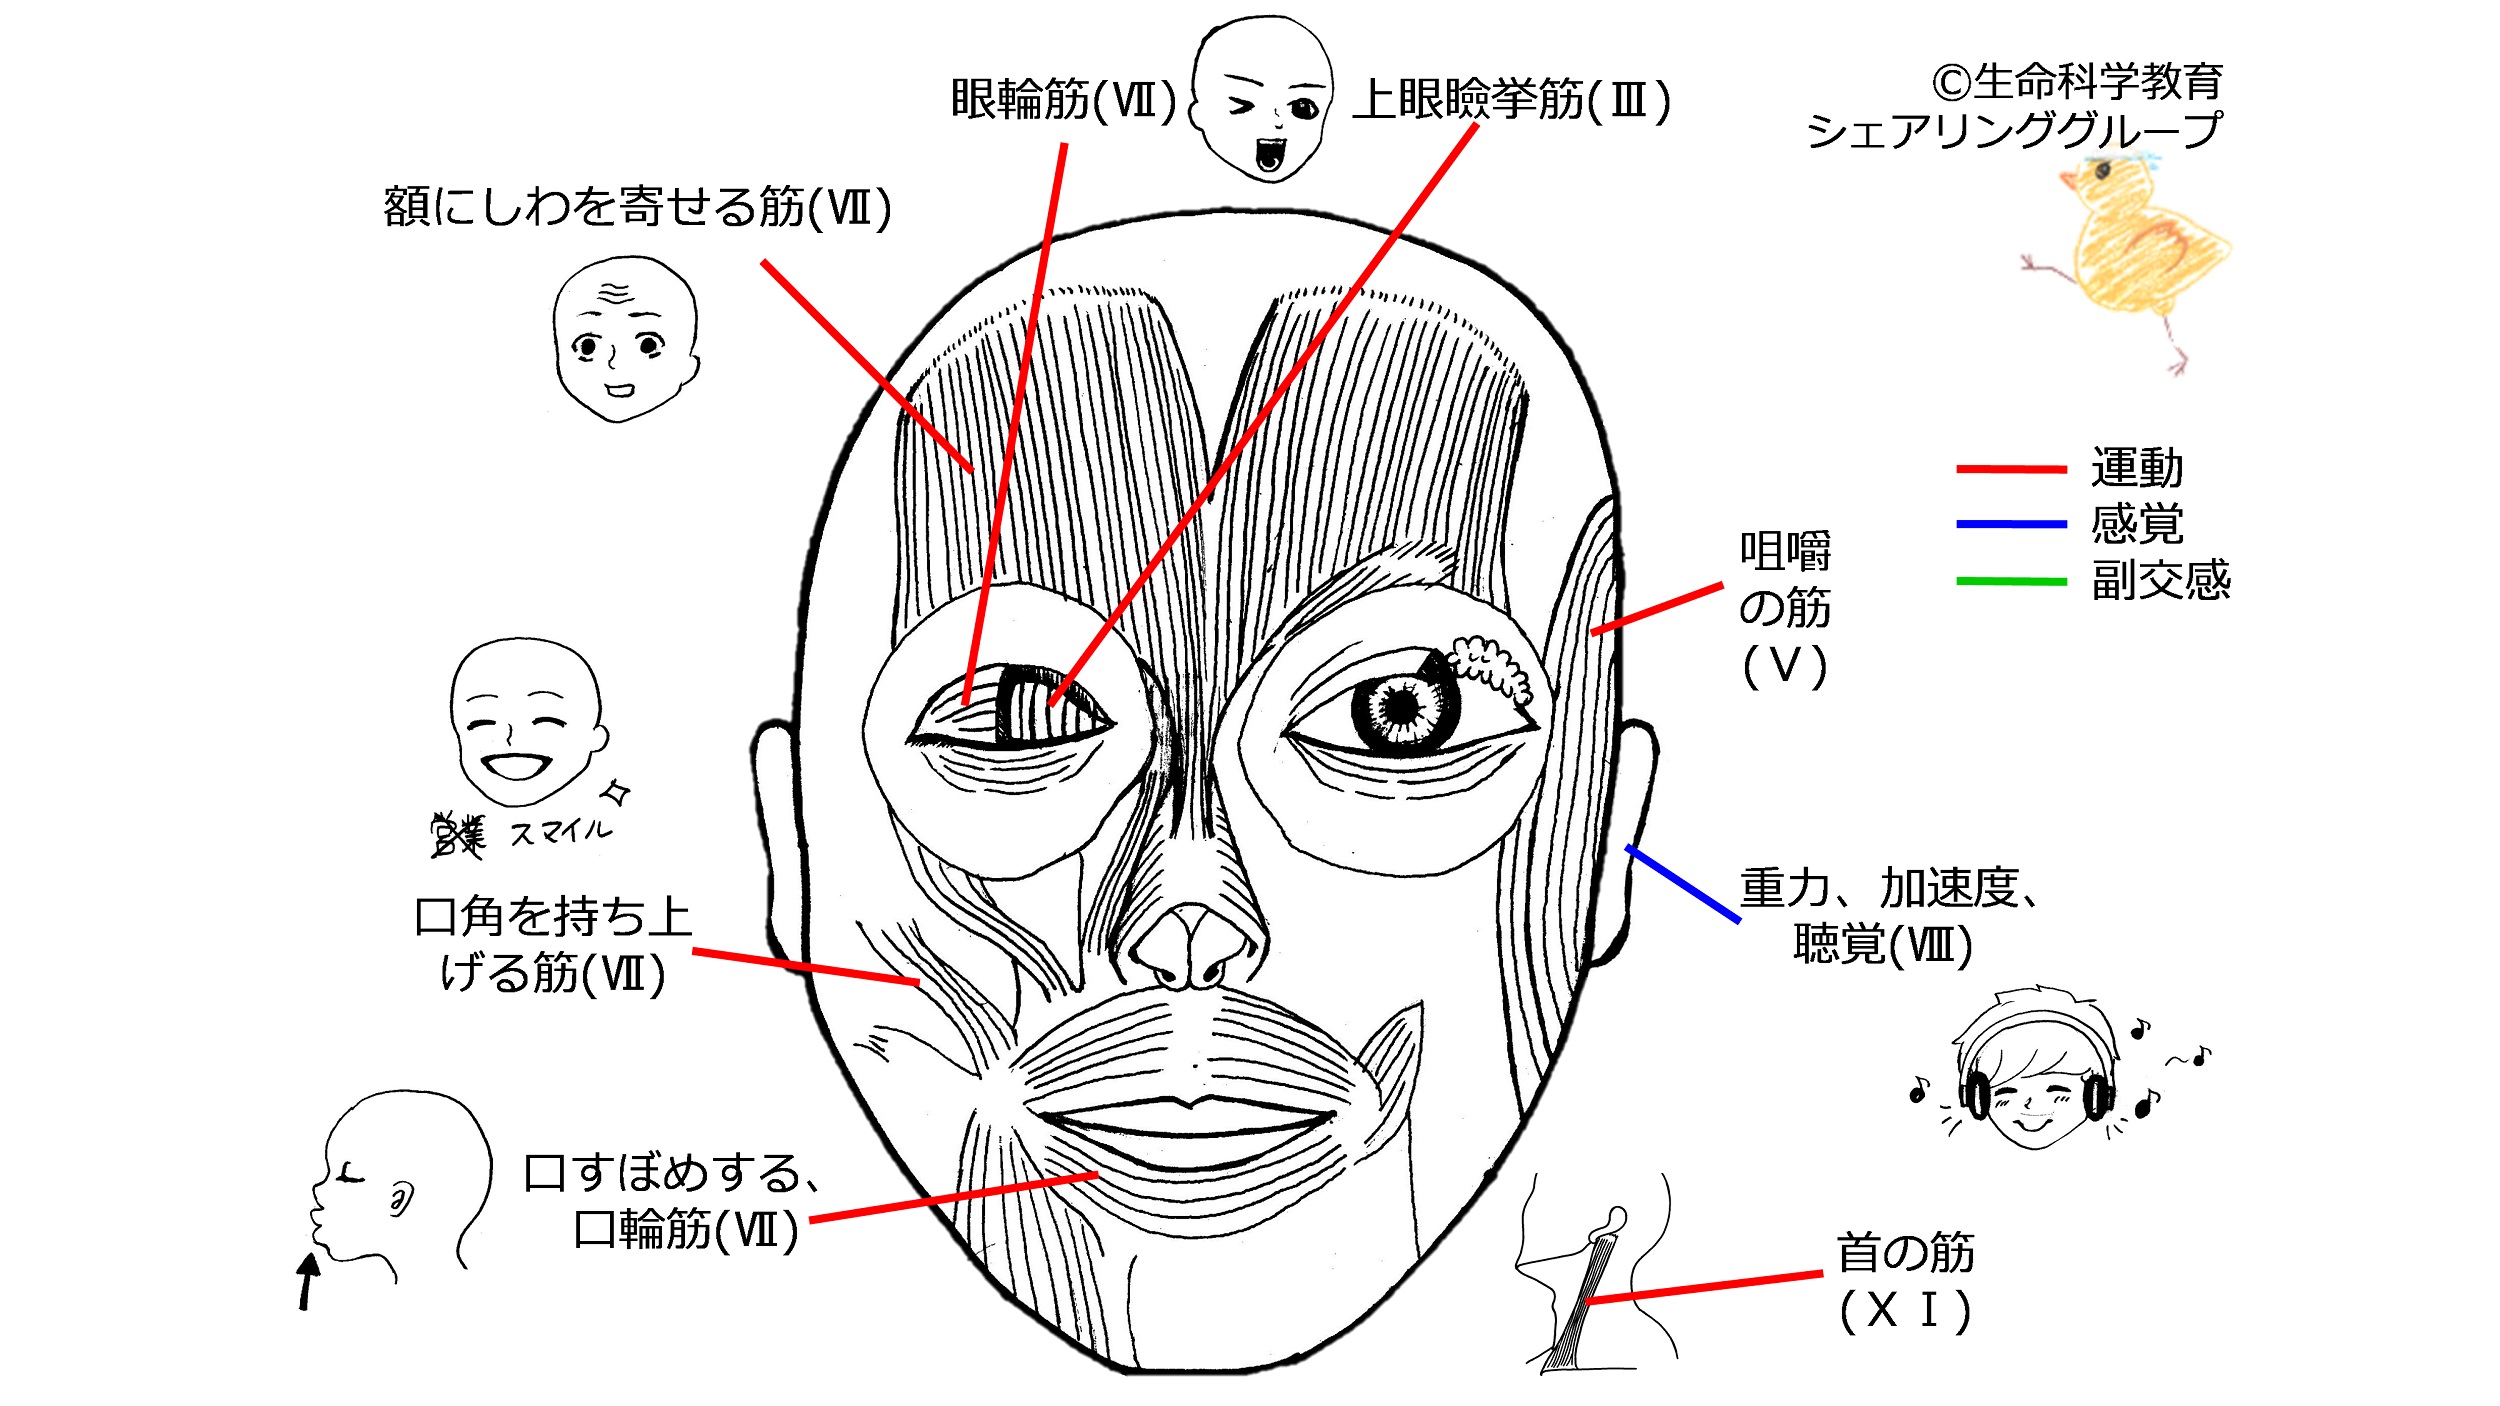 Cranial-summary-front.jpg